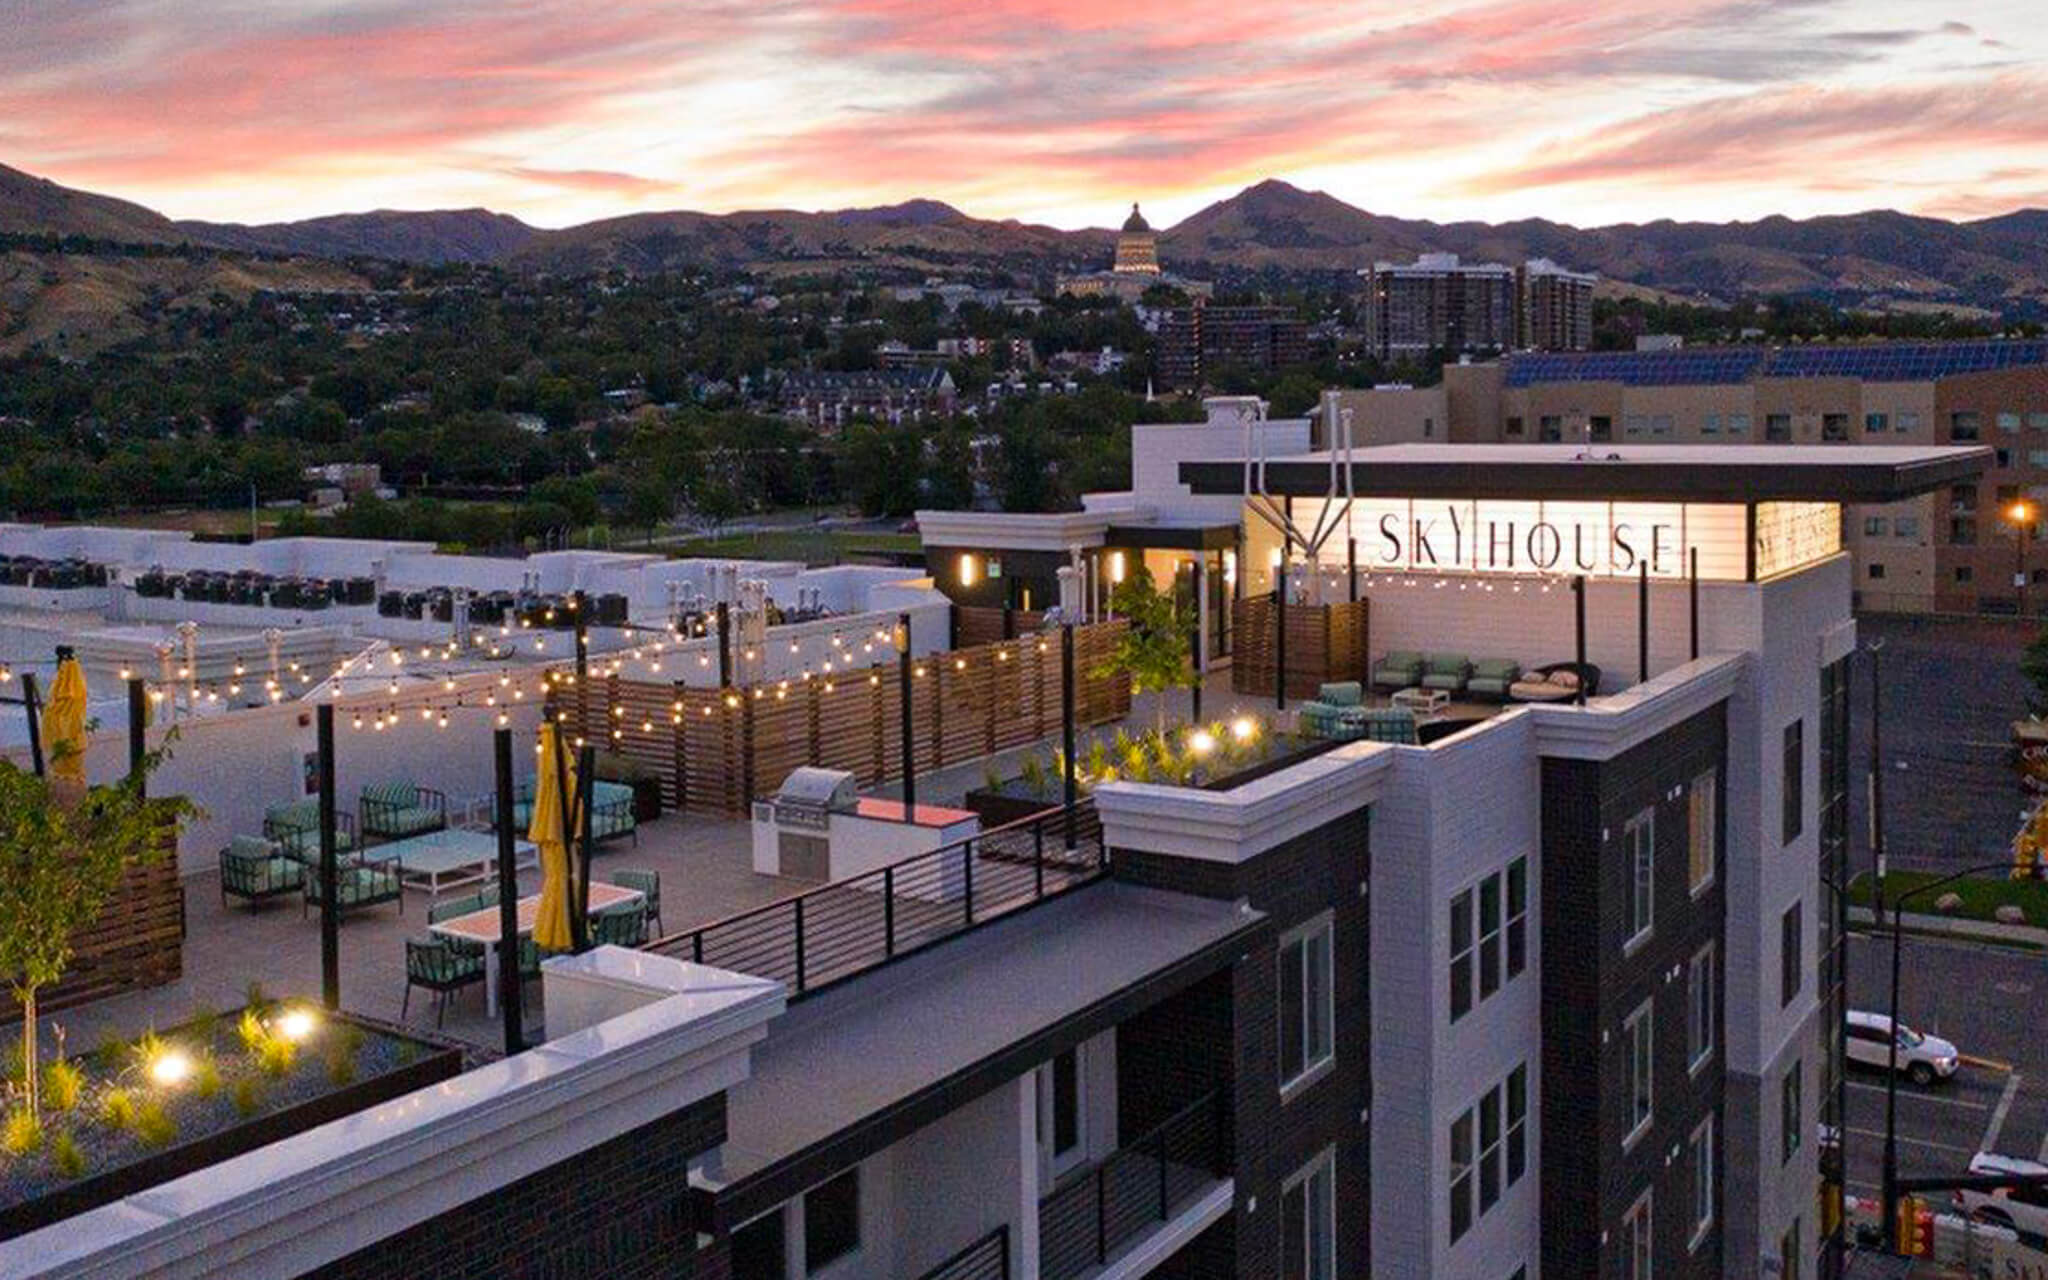 Paragon Corporate Housing - Skyhouse Apartments - Salt Lake City Utah